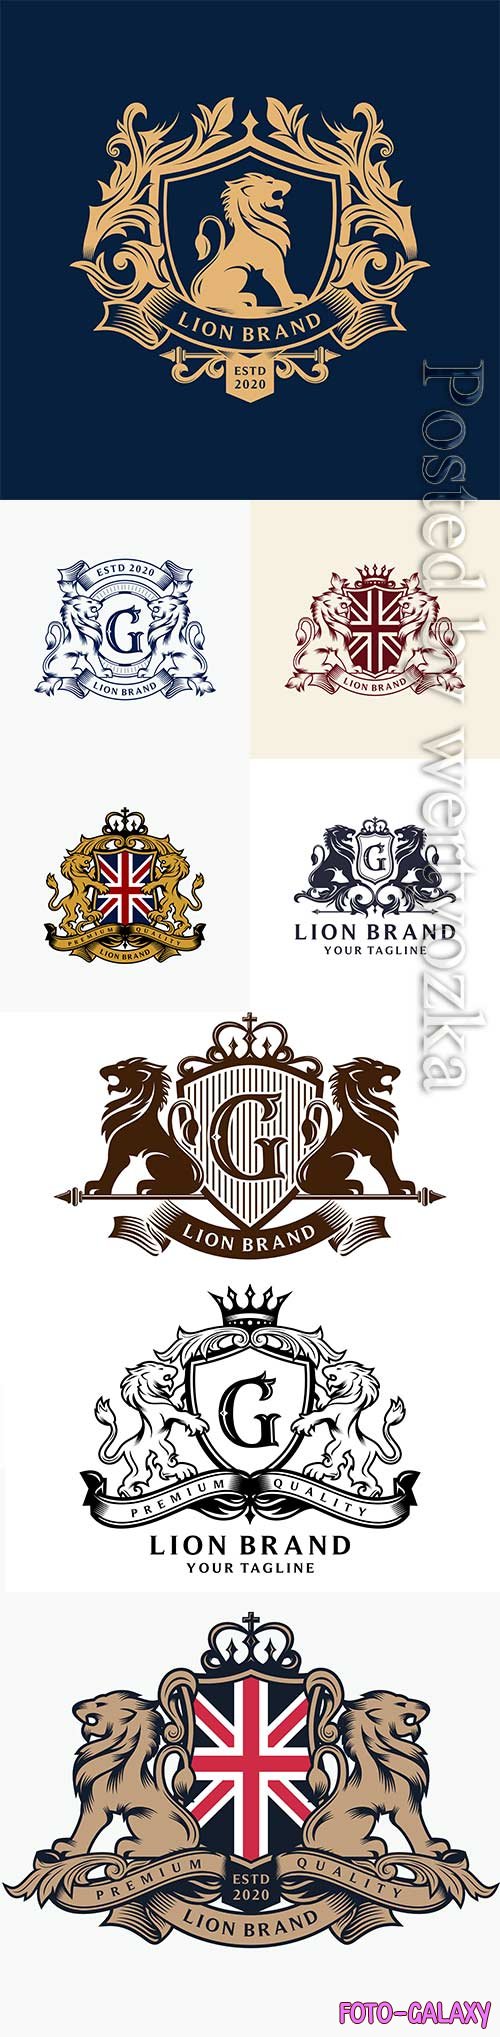 Heraldry lion brand logo design premium vector